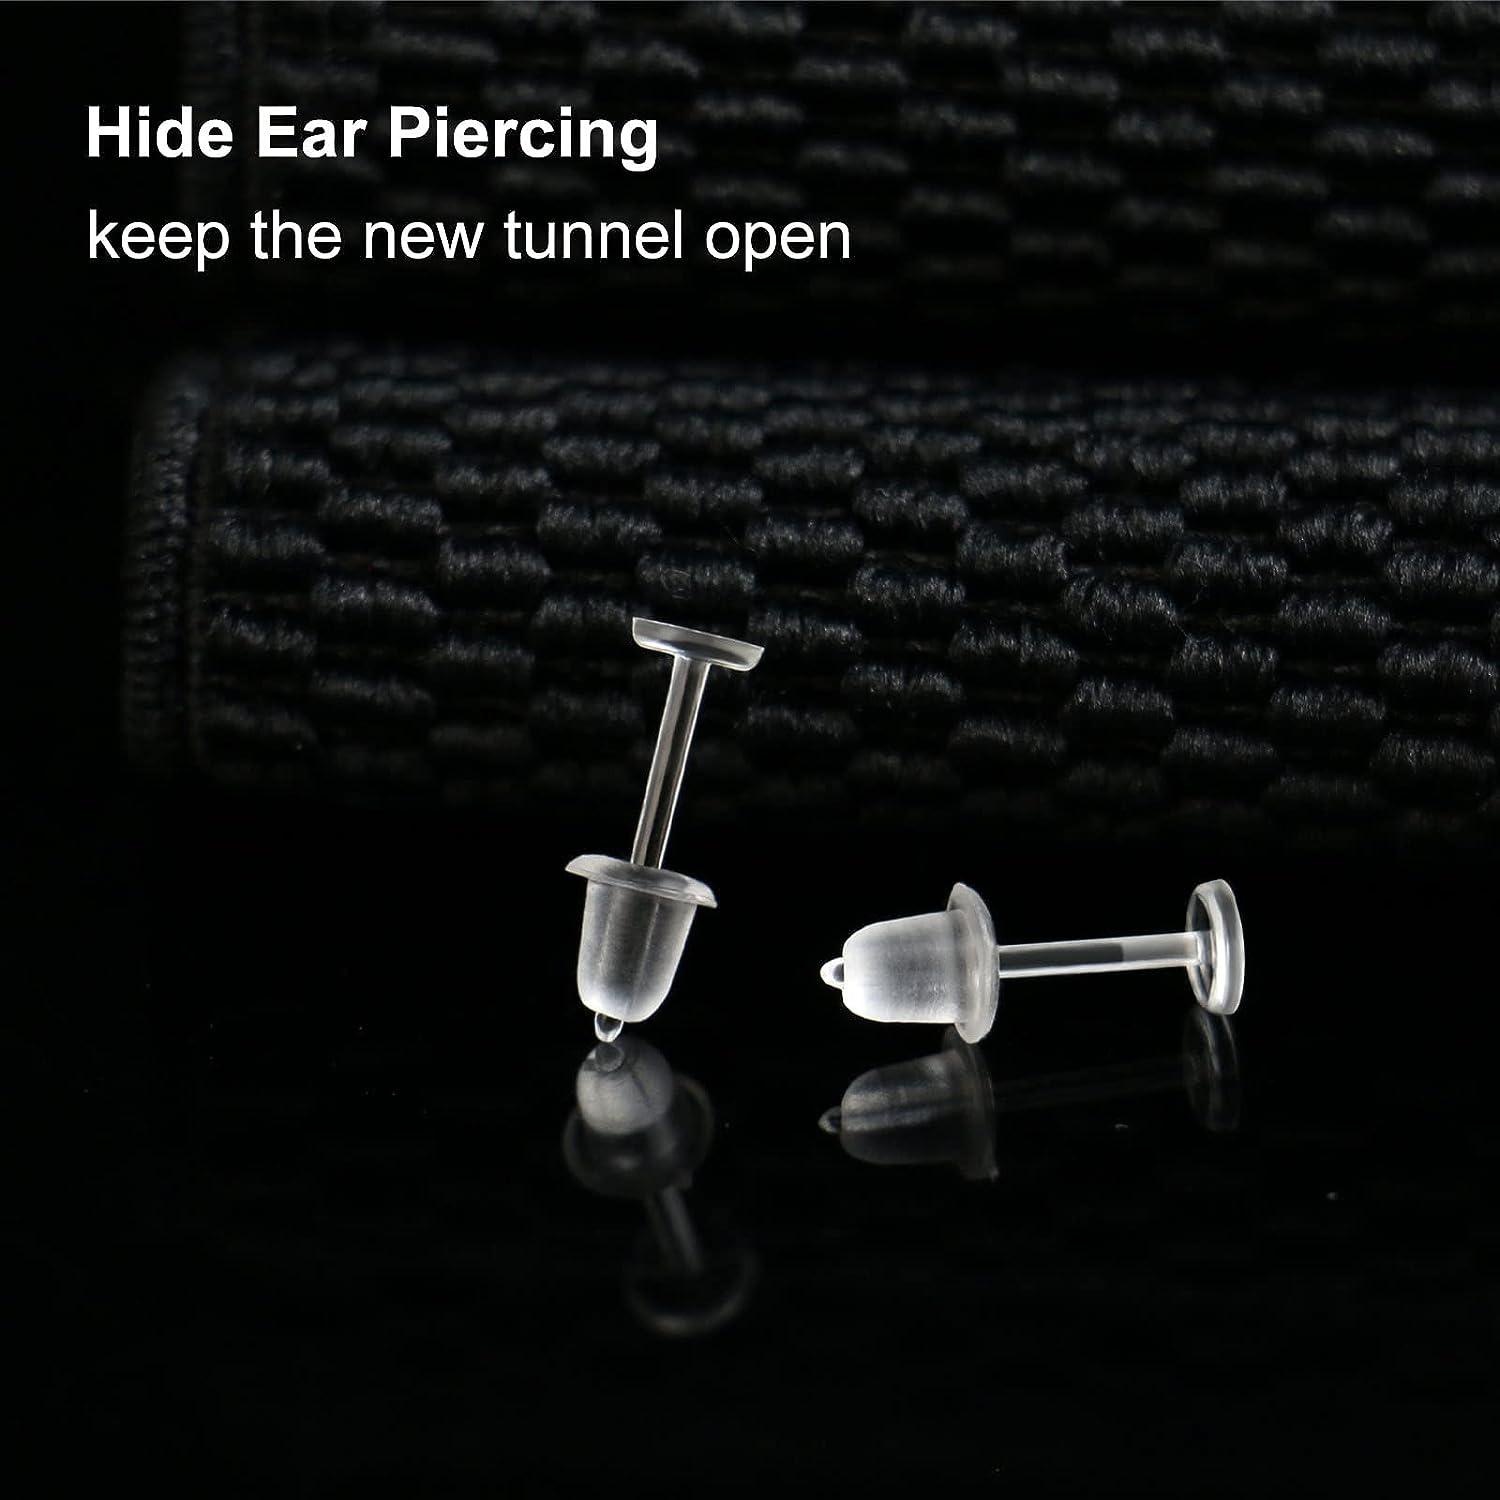 Plastic Earring Backs, Small Bullet Shaped, Clear Bullet Bax